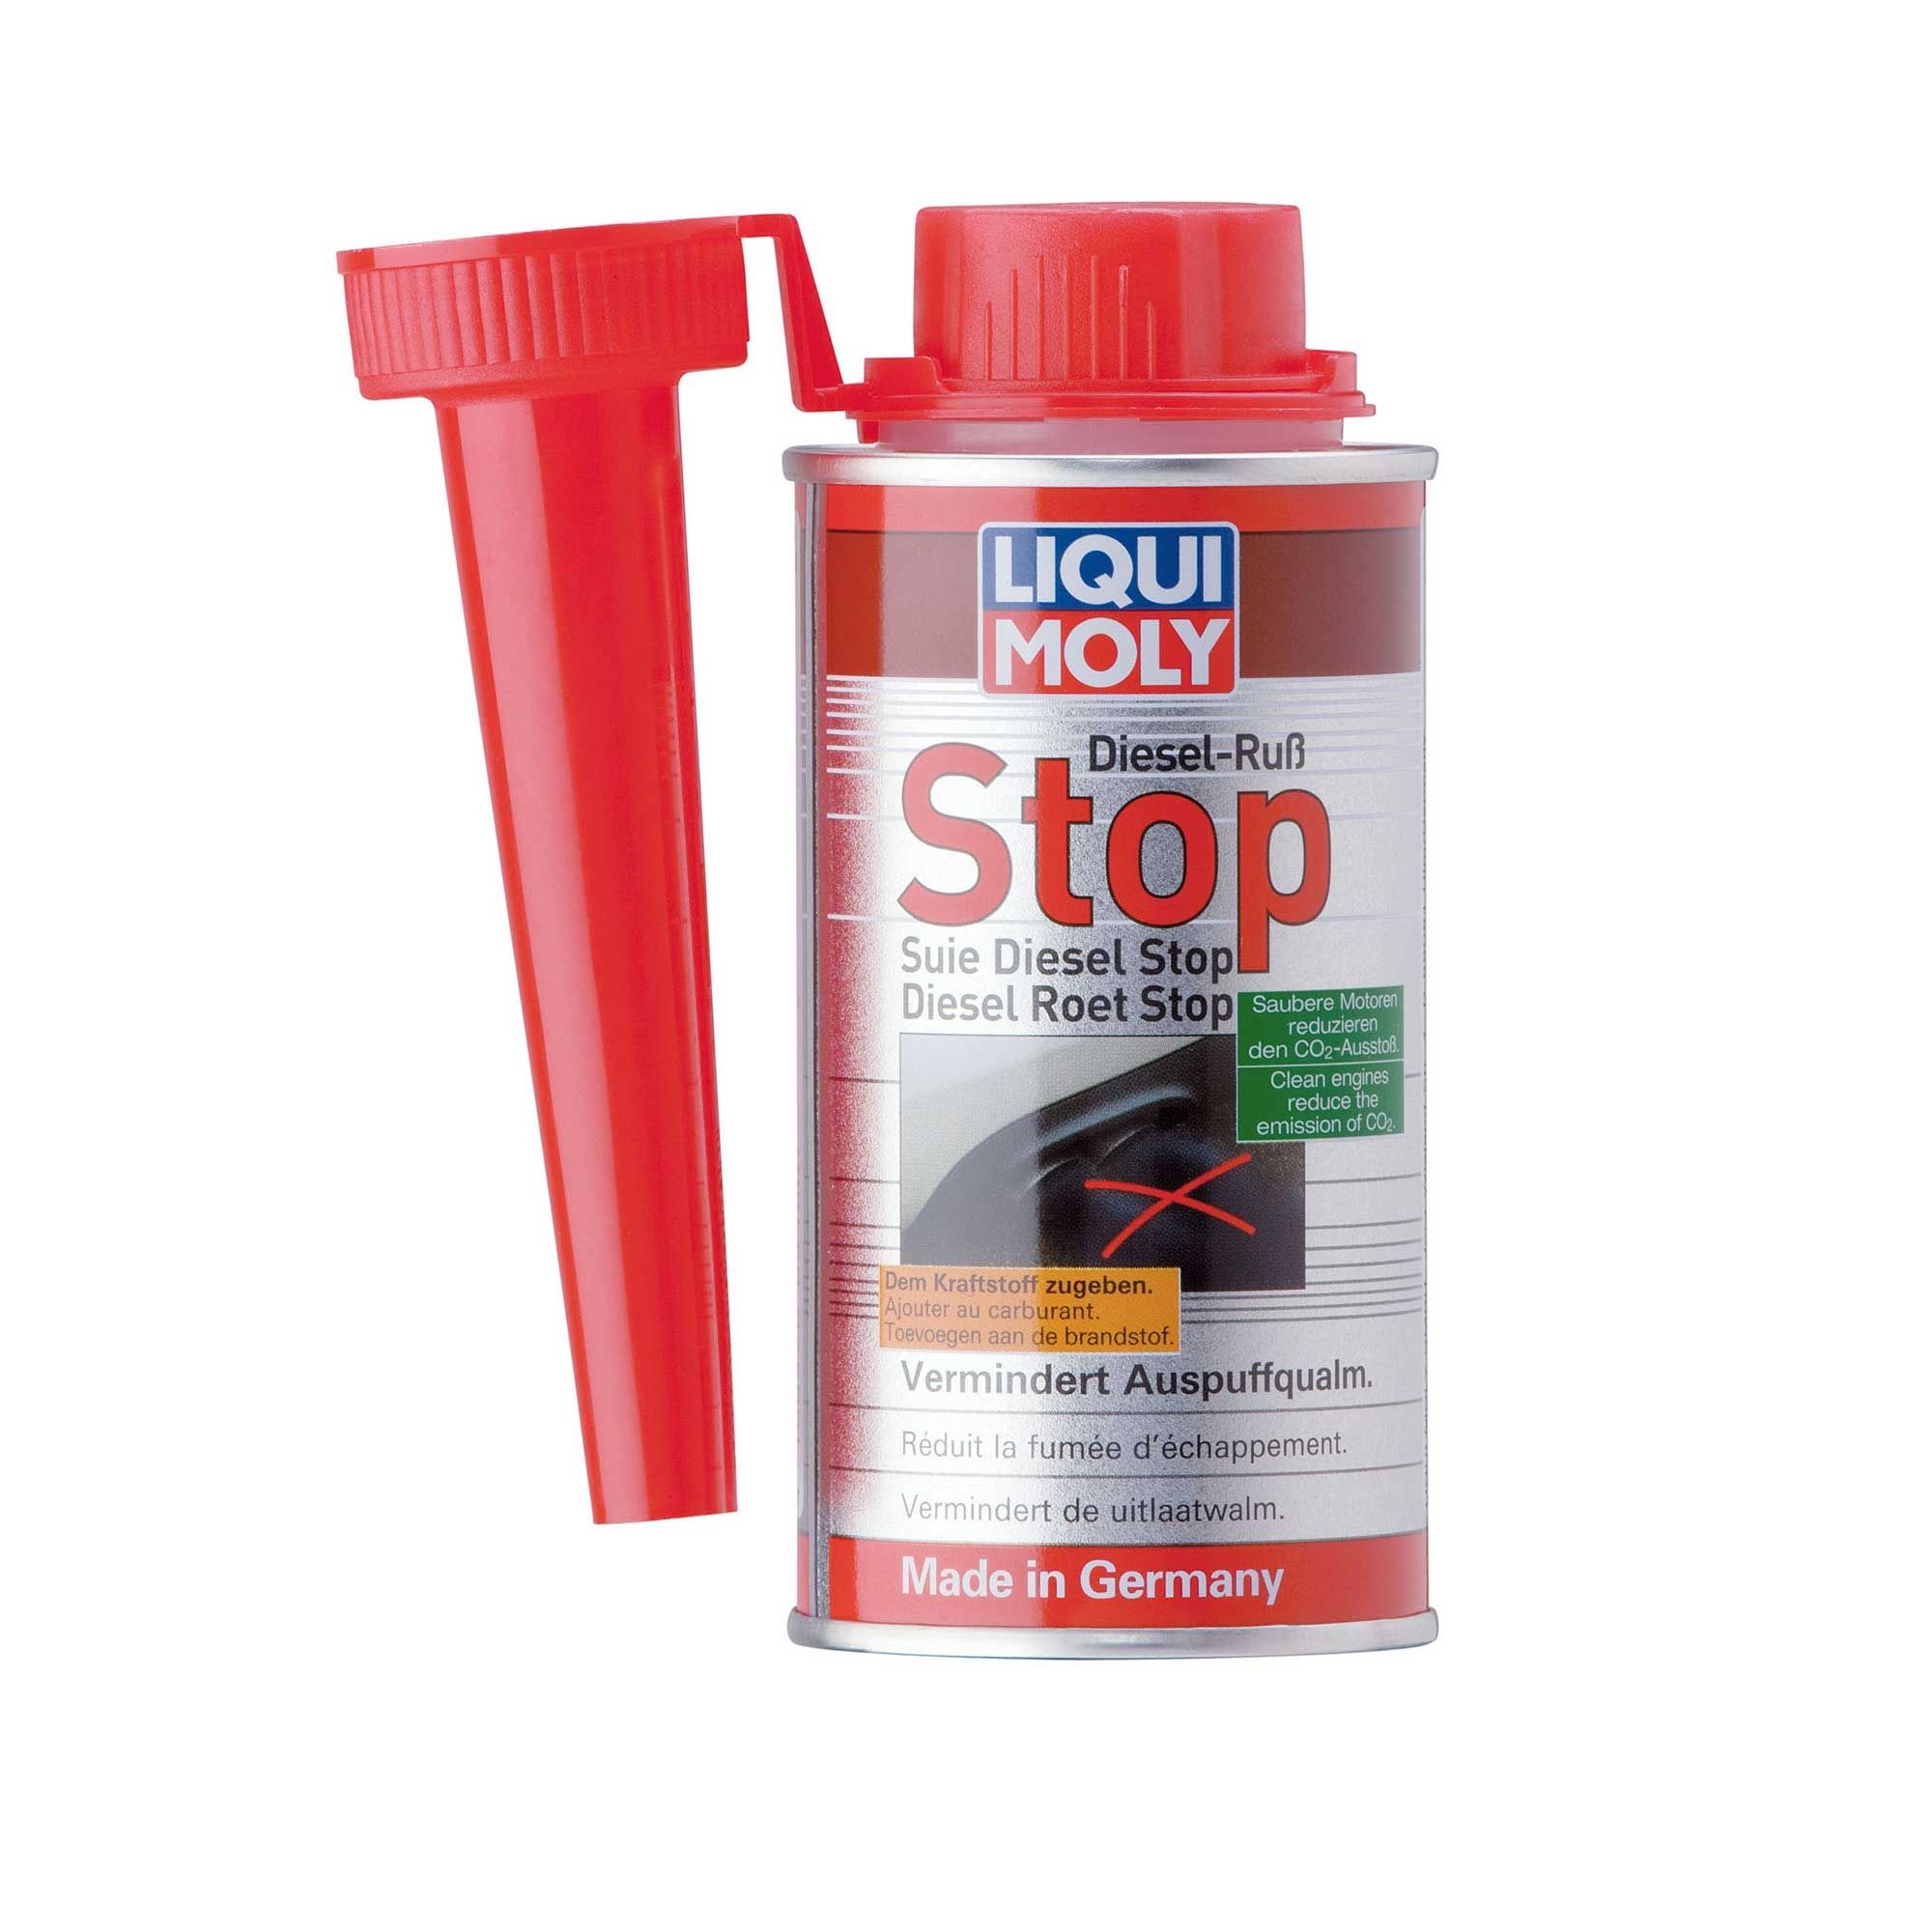 Liqui Moly Diesel-Ruß Stop 150 ml bei ATO24 ❗